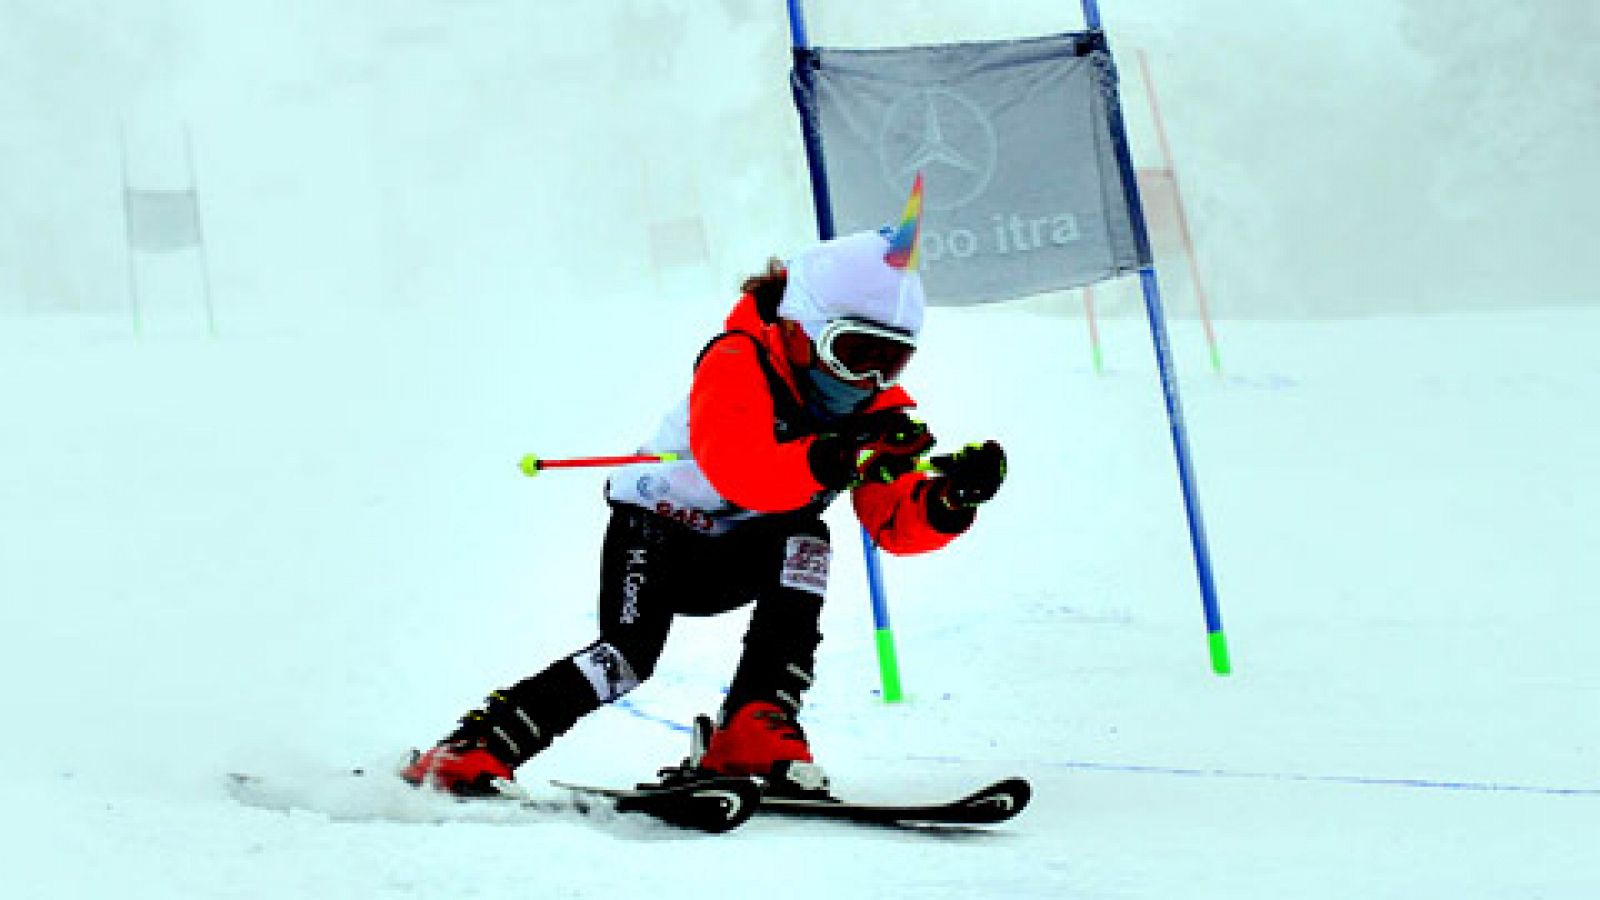 Sin programa: Paula Carrascosa: "Sueño con ser esquiadora profesional e ir a unos Juegos Olímpicos" | RTVE Play